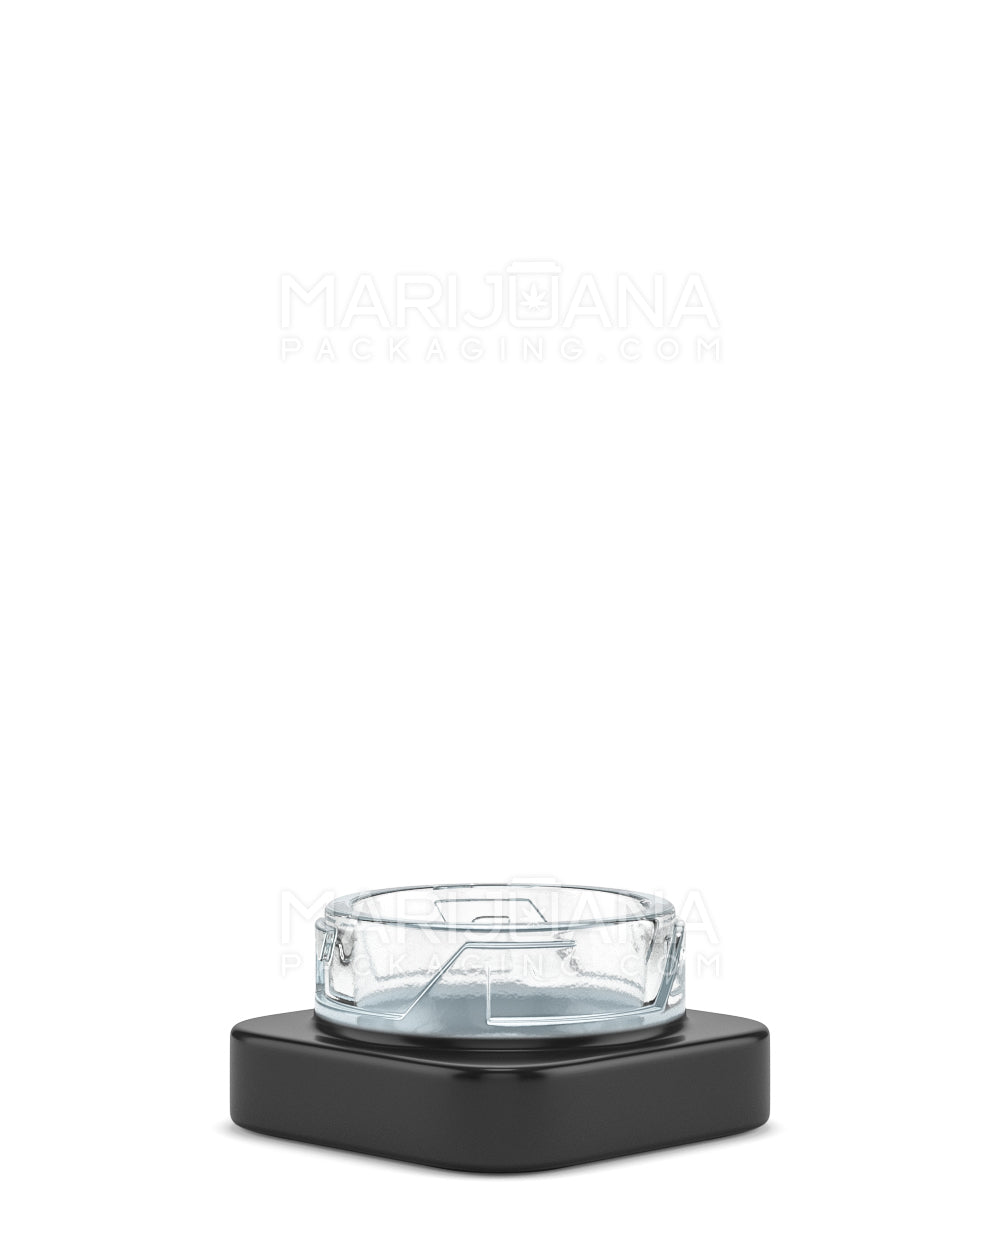 Child Resistant | Qube Black Glass Concentrate Jar w/ White Interior & Black Cap | 32mm - 5mL - 250 Count - 2